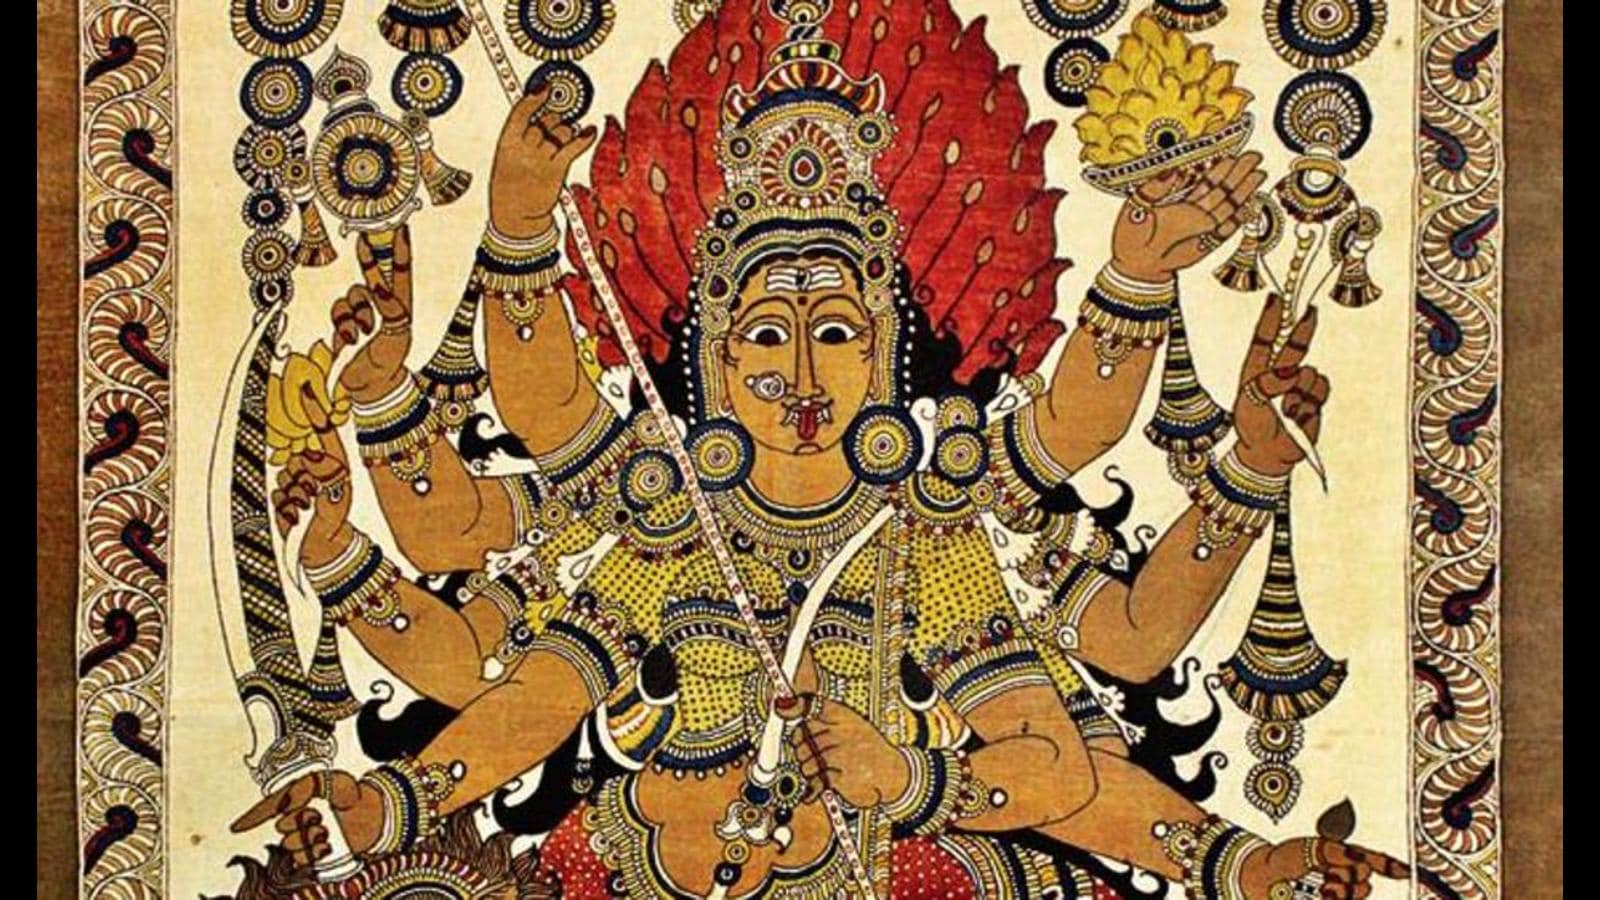 Top 50+ Goddess Lakshmi Images | Laxmi Devi Photos | Hindu Gallery